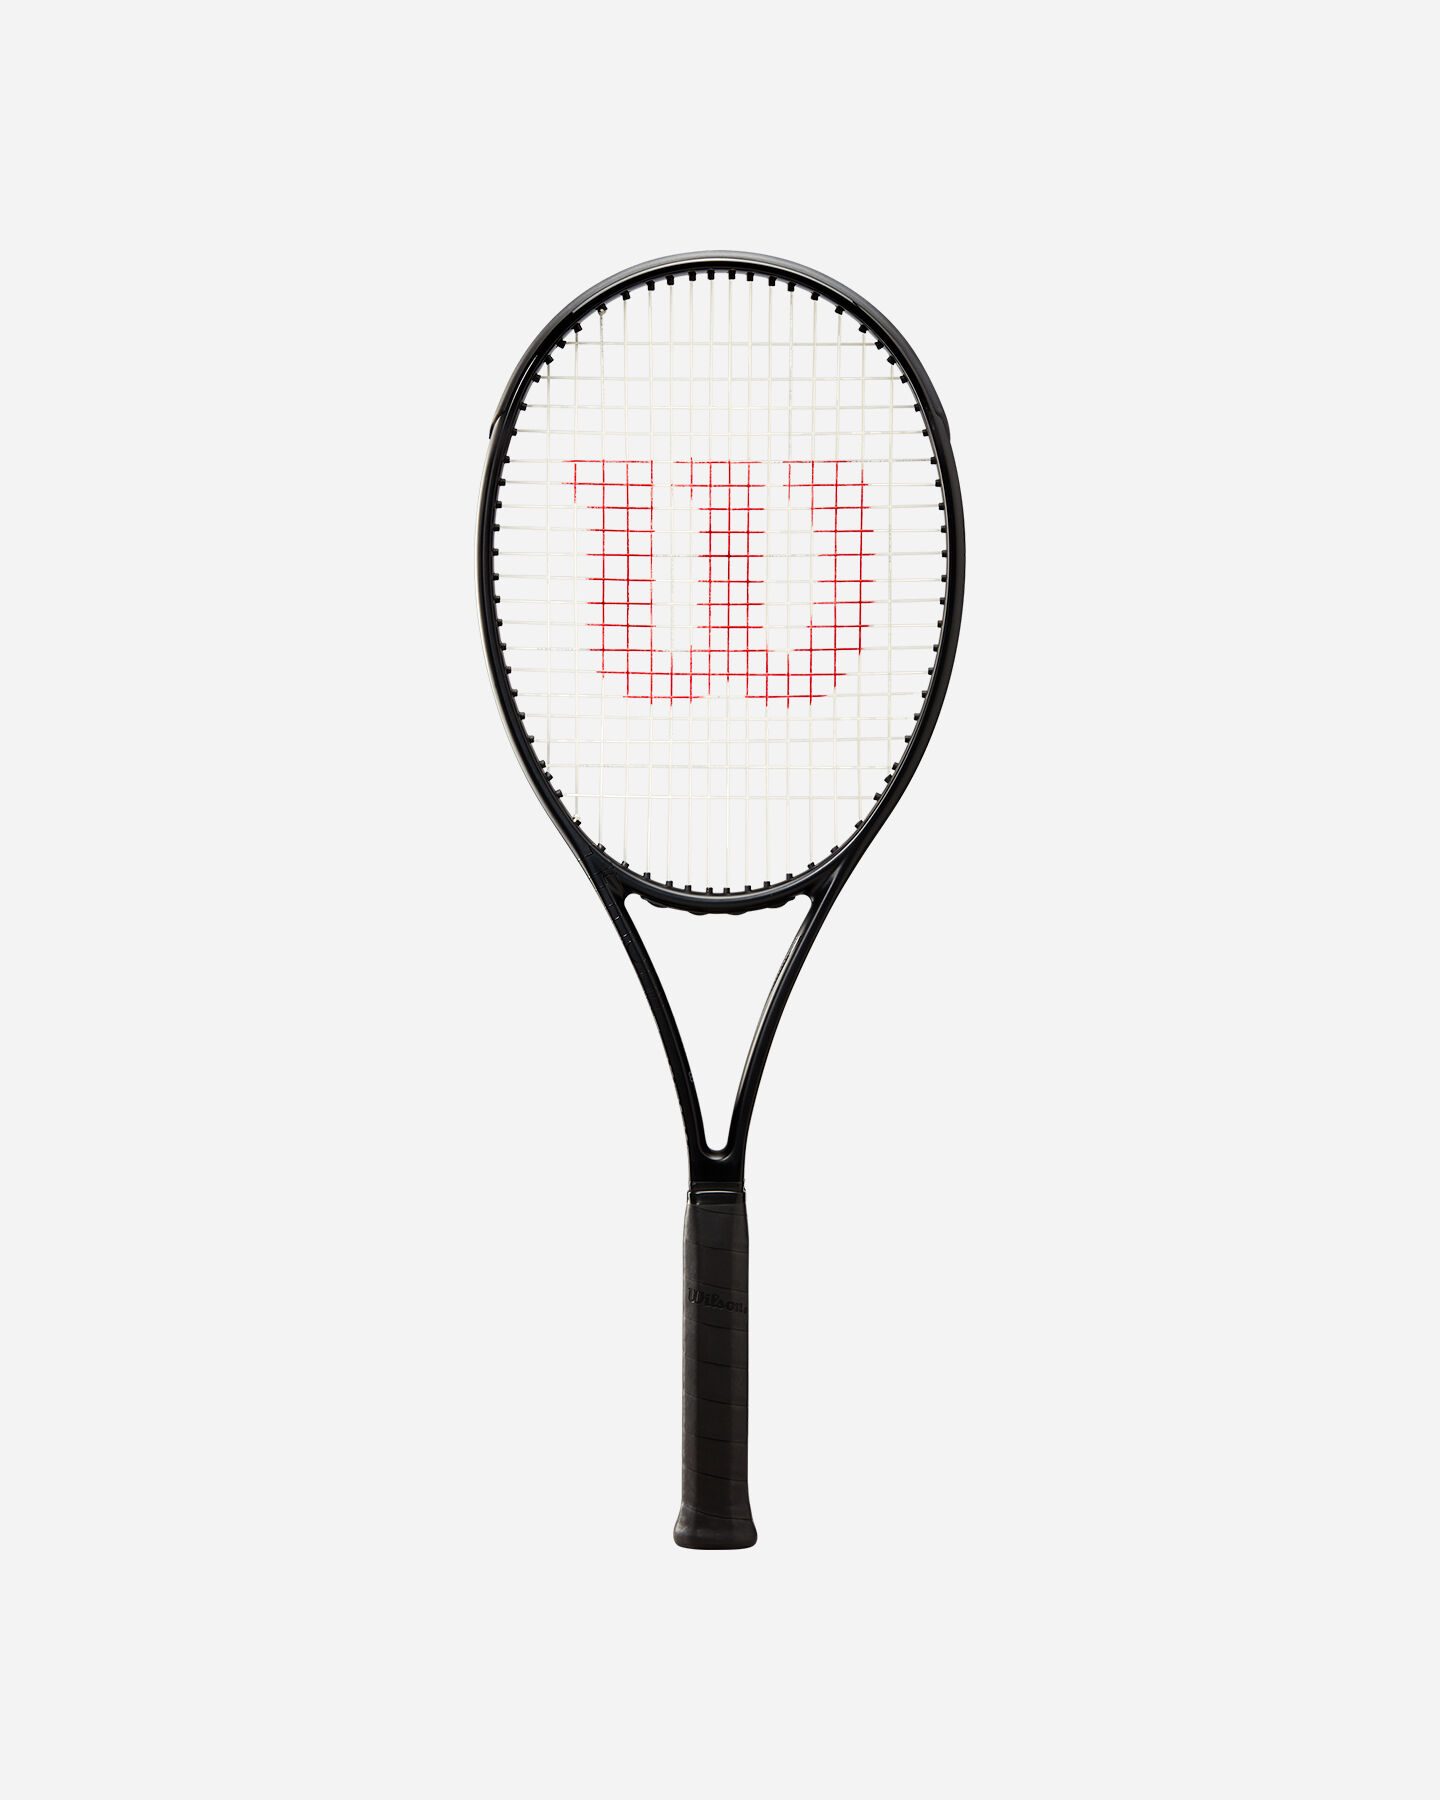  Racchetta tennis WILSON NOIR BLADE 98 16X19 V8  S5635036|UNI|2 scatto 0